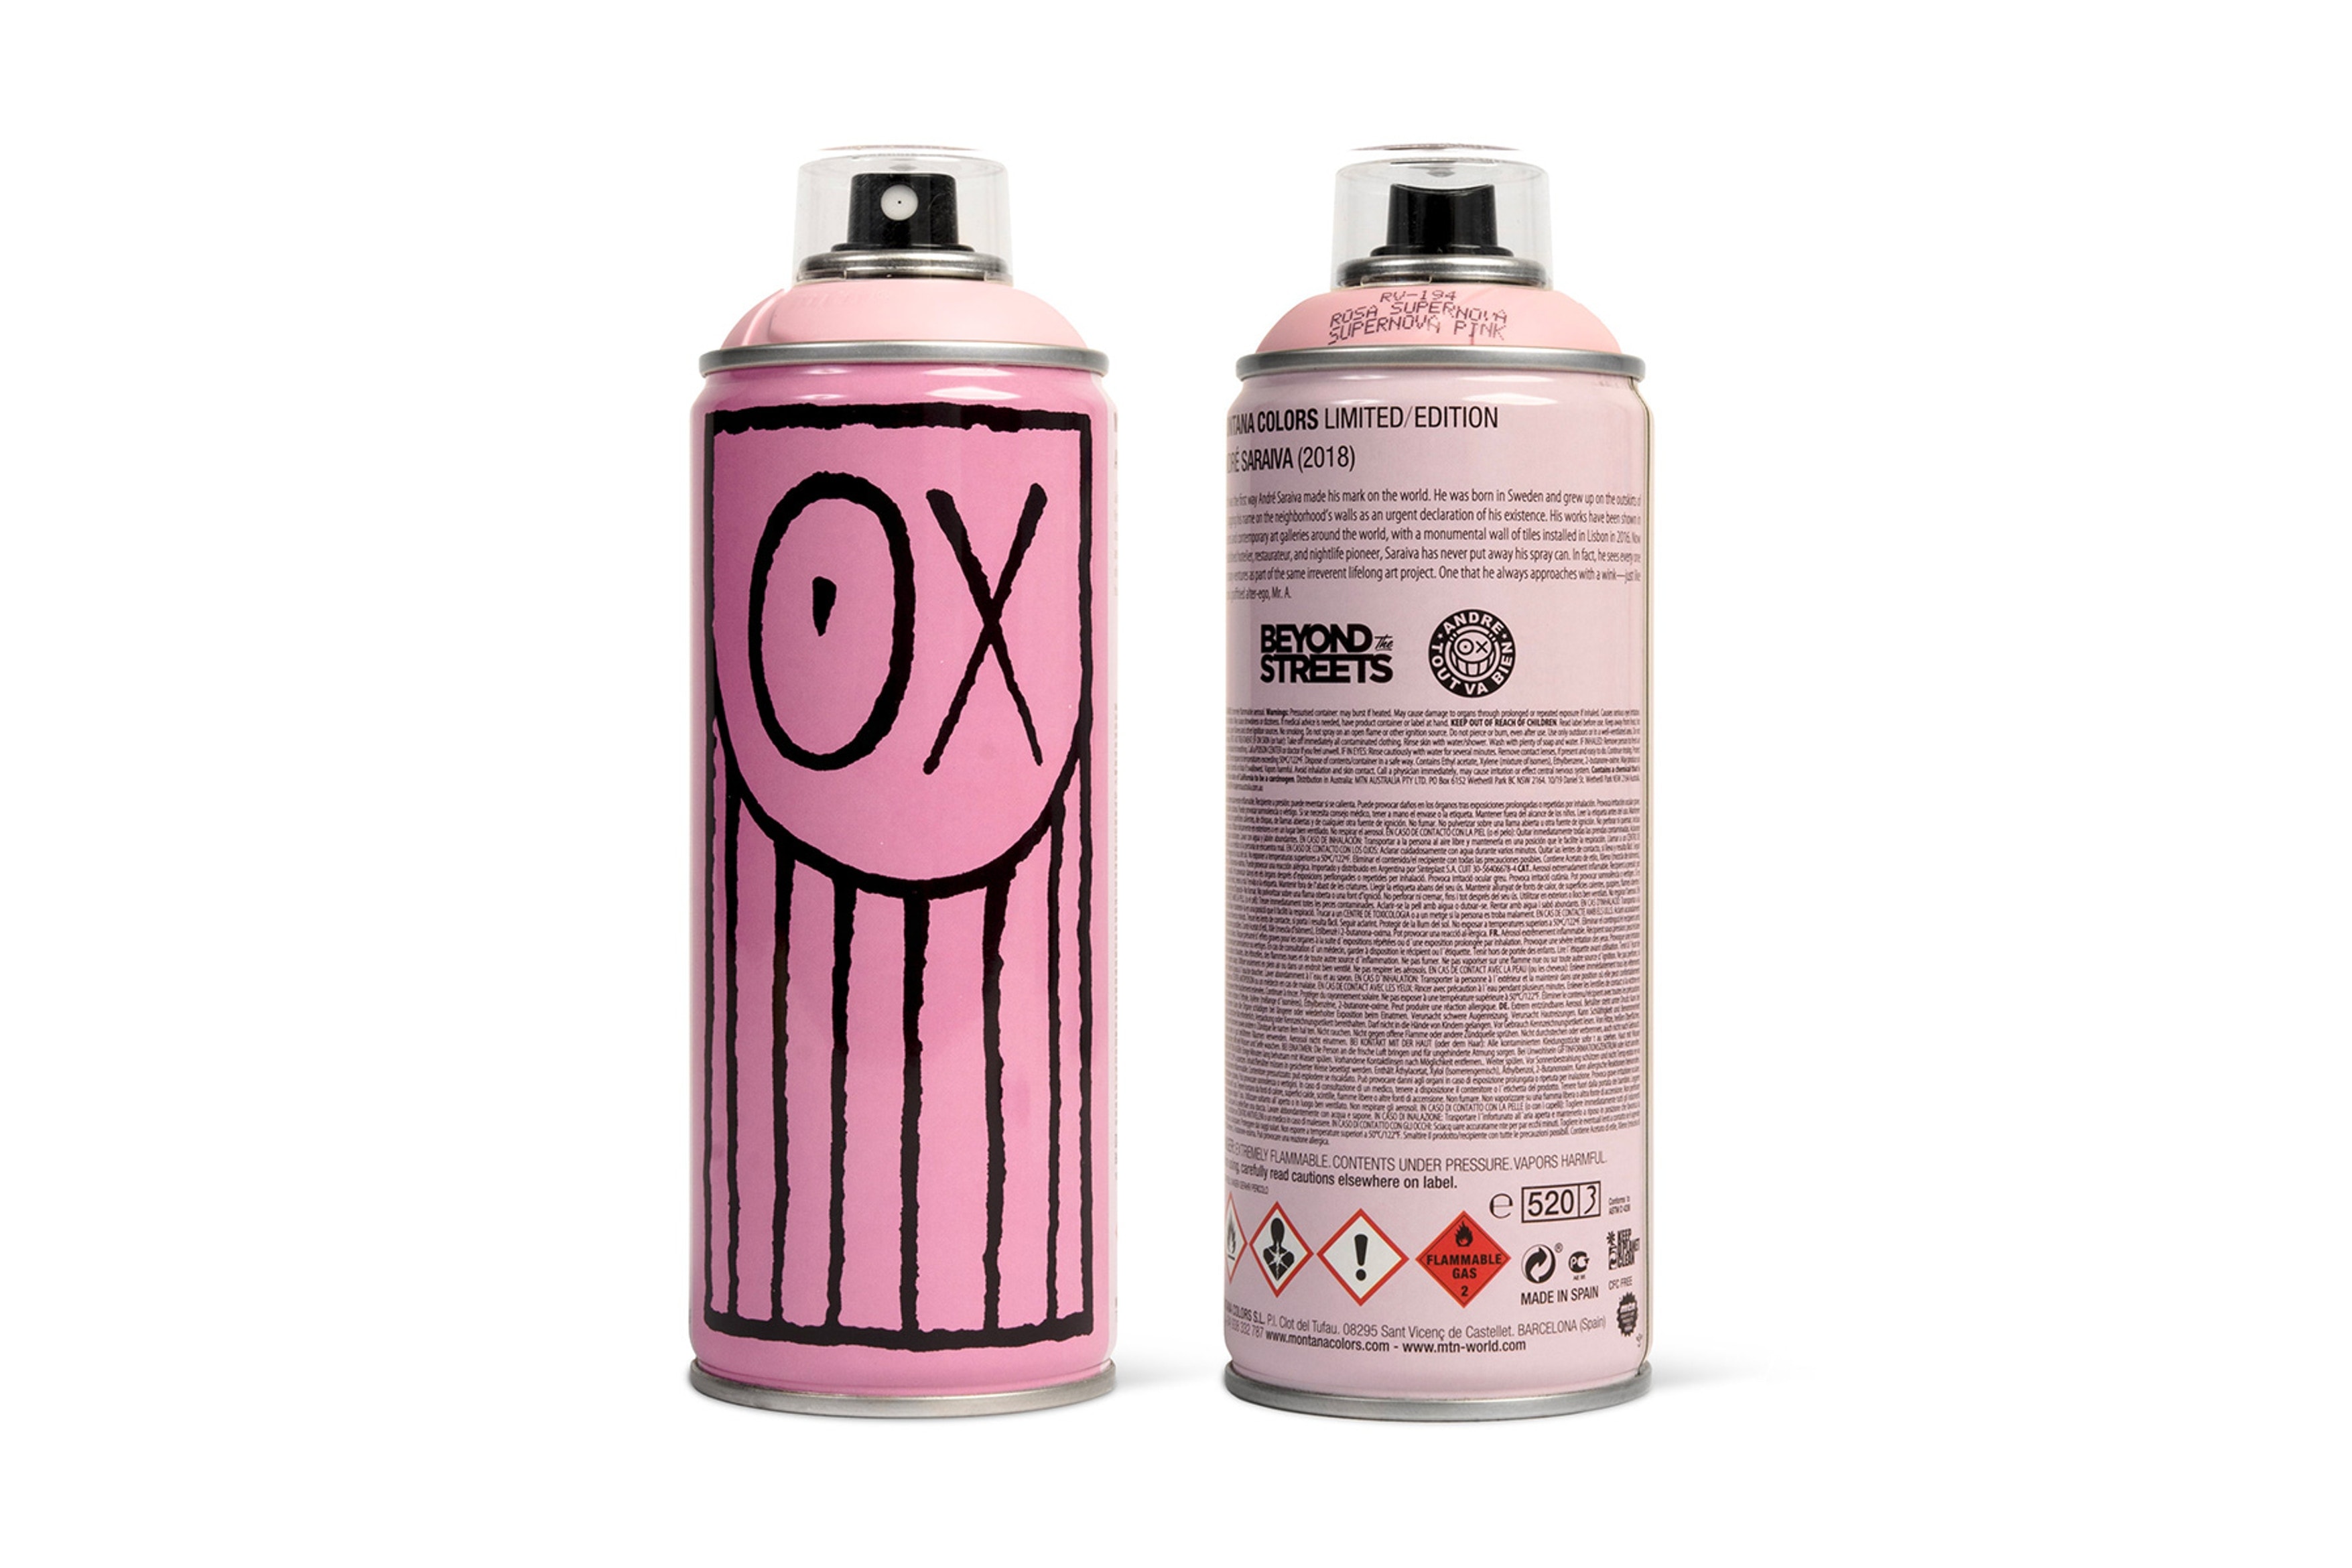 Jean-Michel Basquiat、Keith Haring 及 André Saraiva 藝街作品注入噴漆罐包裝設計